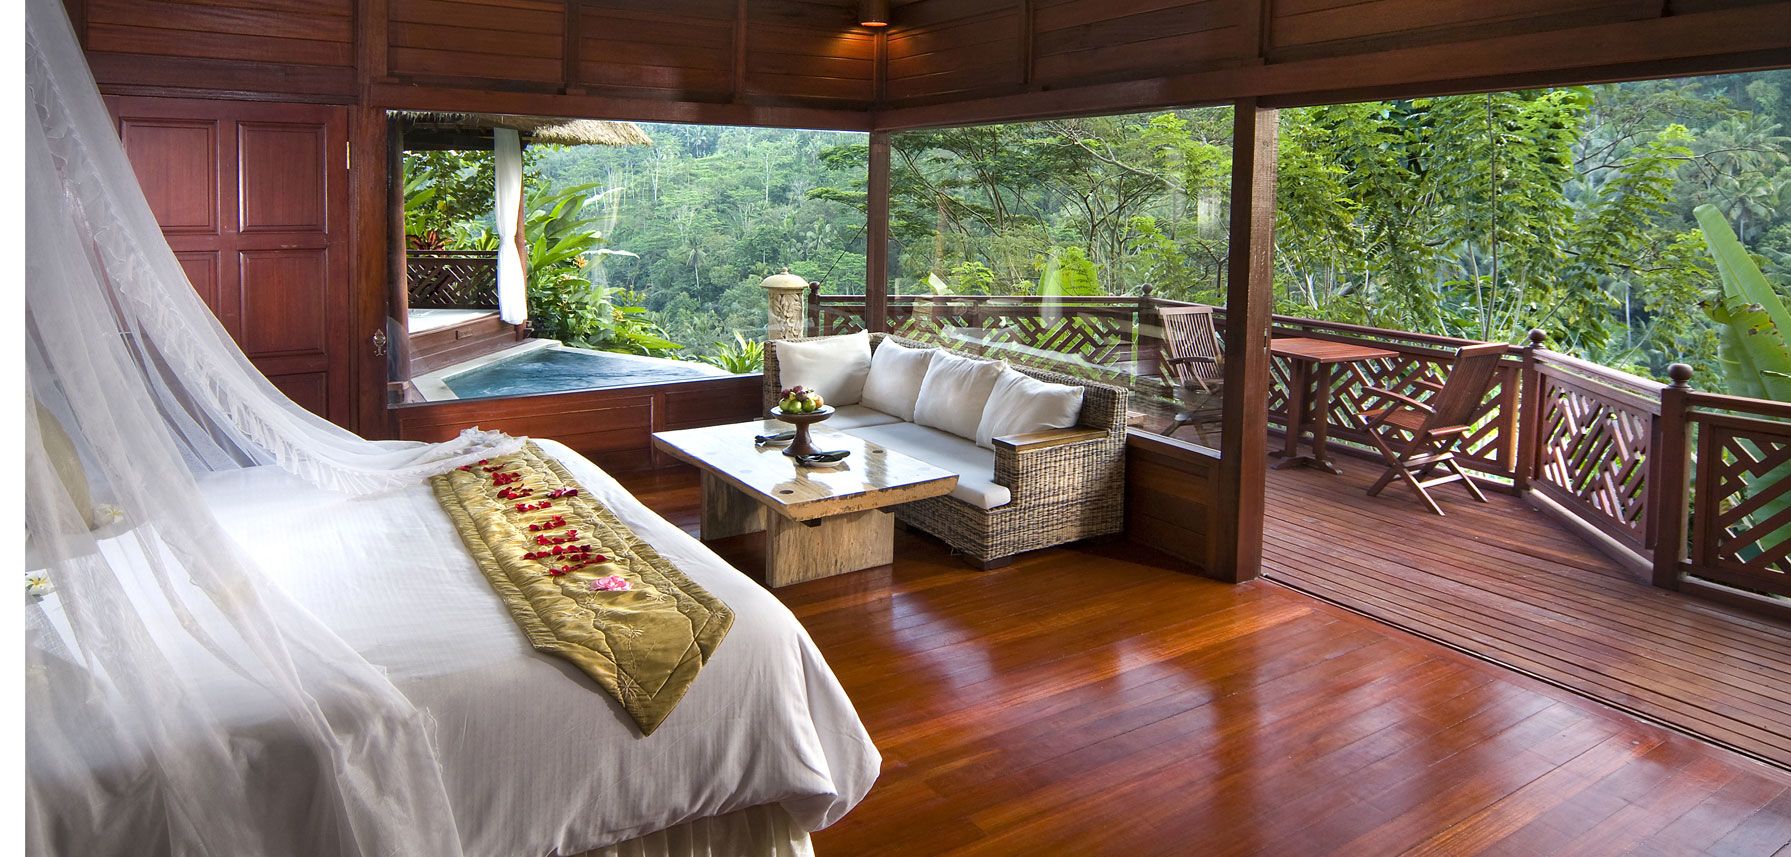 5 Resort untuk Honeymoon di Bali, Sejuk dan Ramah Lingkungan